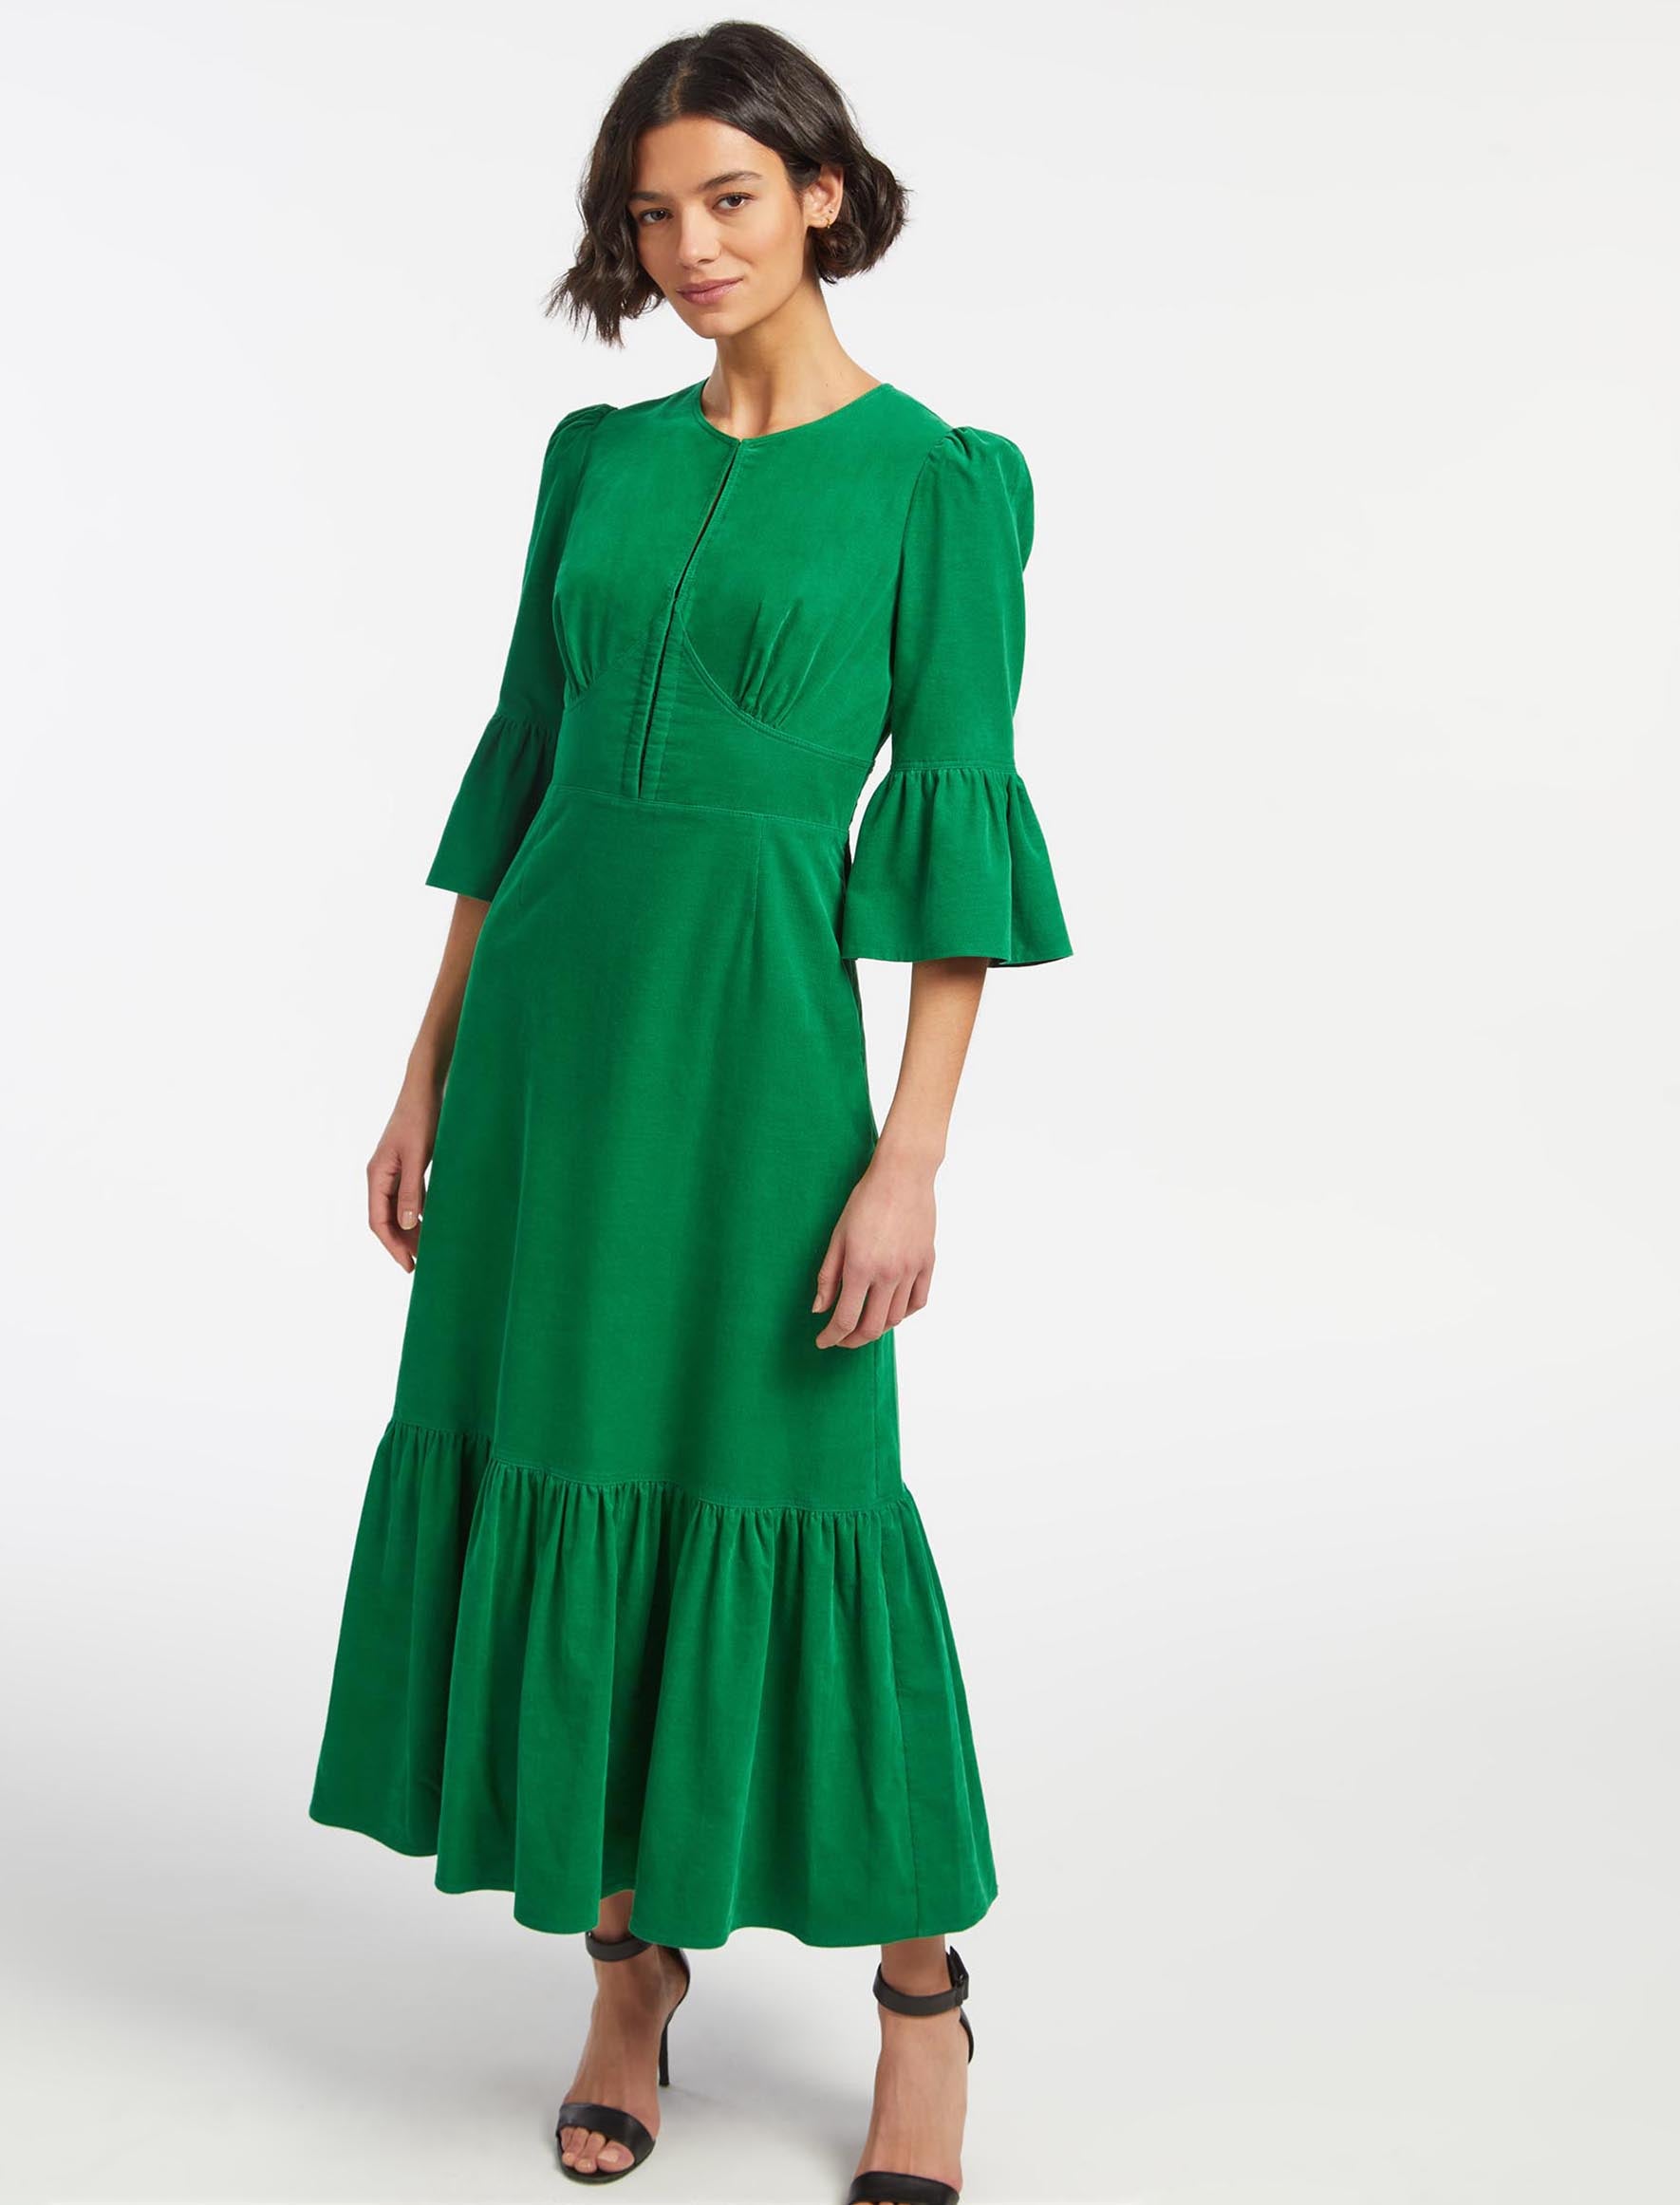 Cefinn Daphne Pin Corduroy Round Neck Maxi Dress - Emerald Green